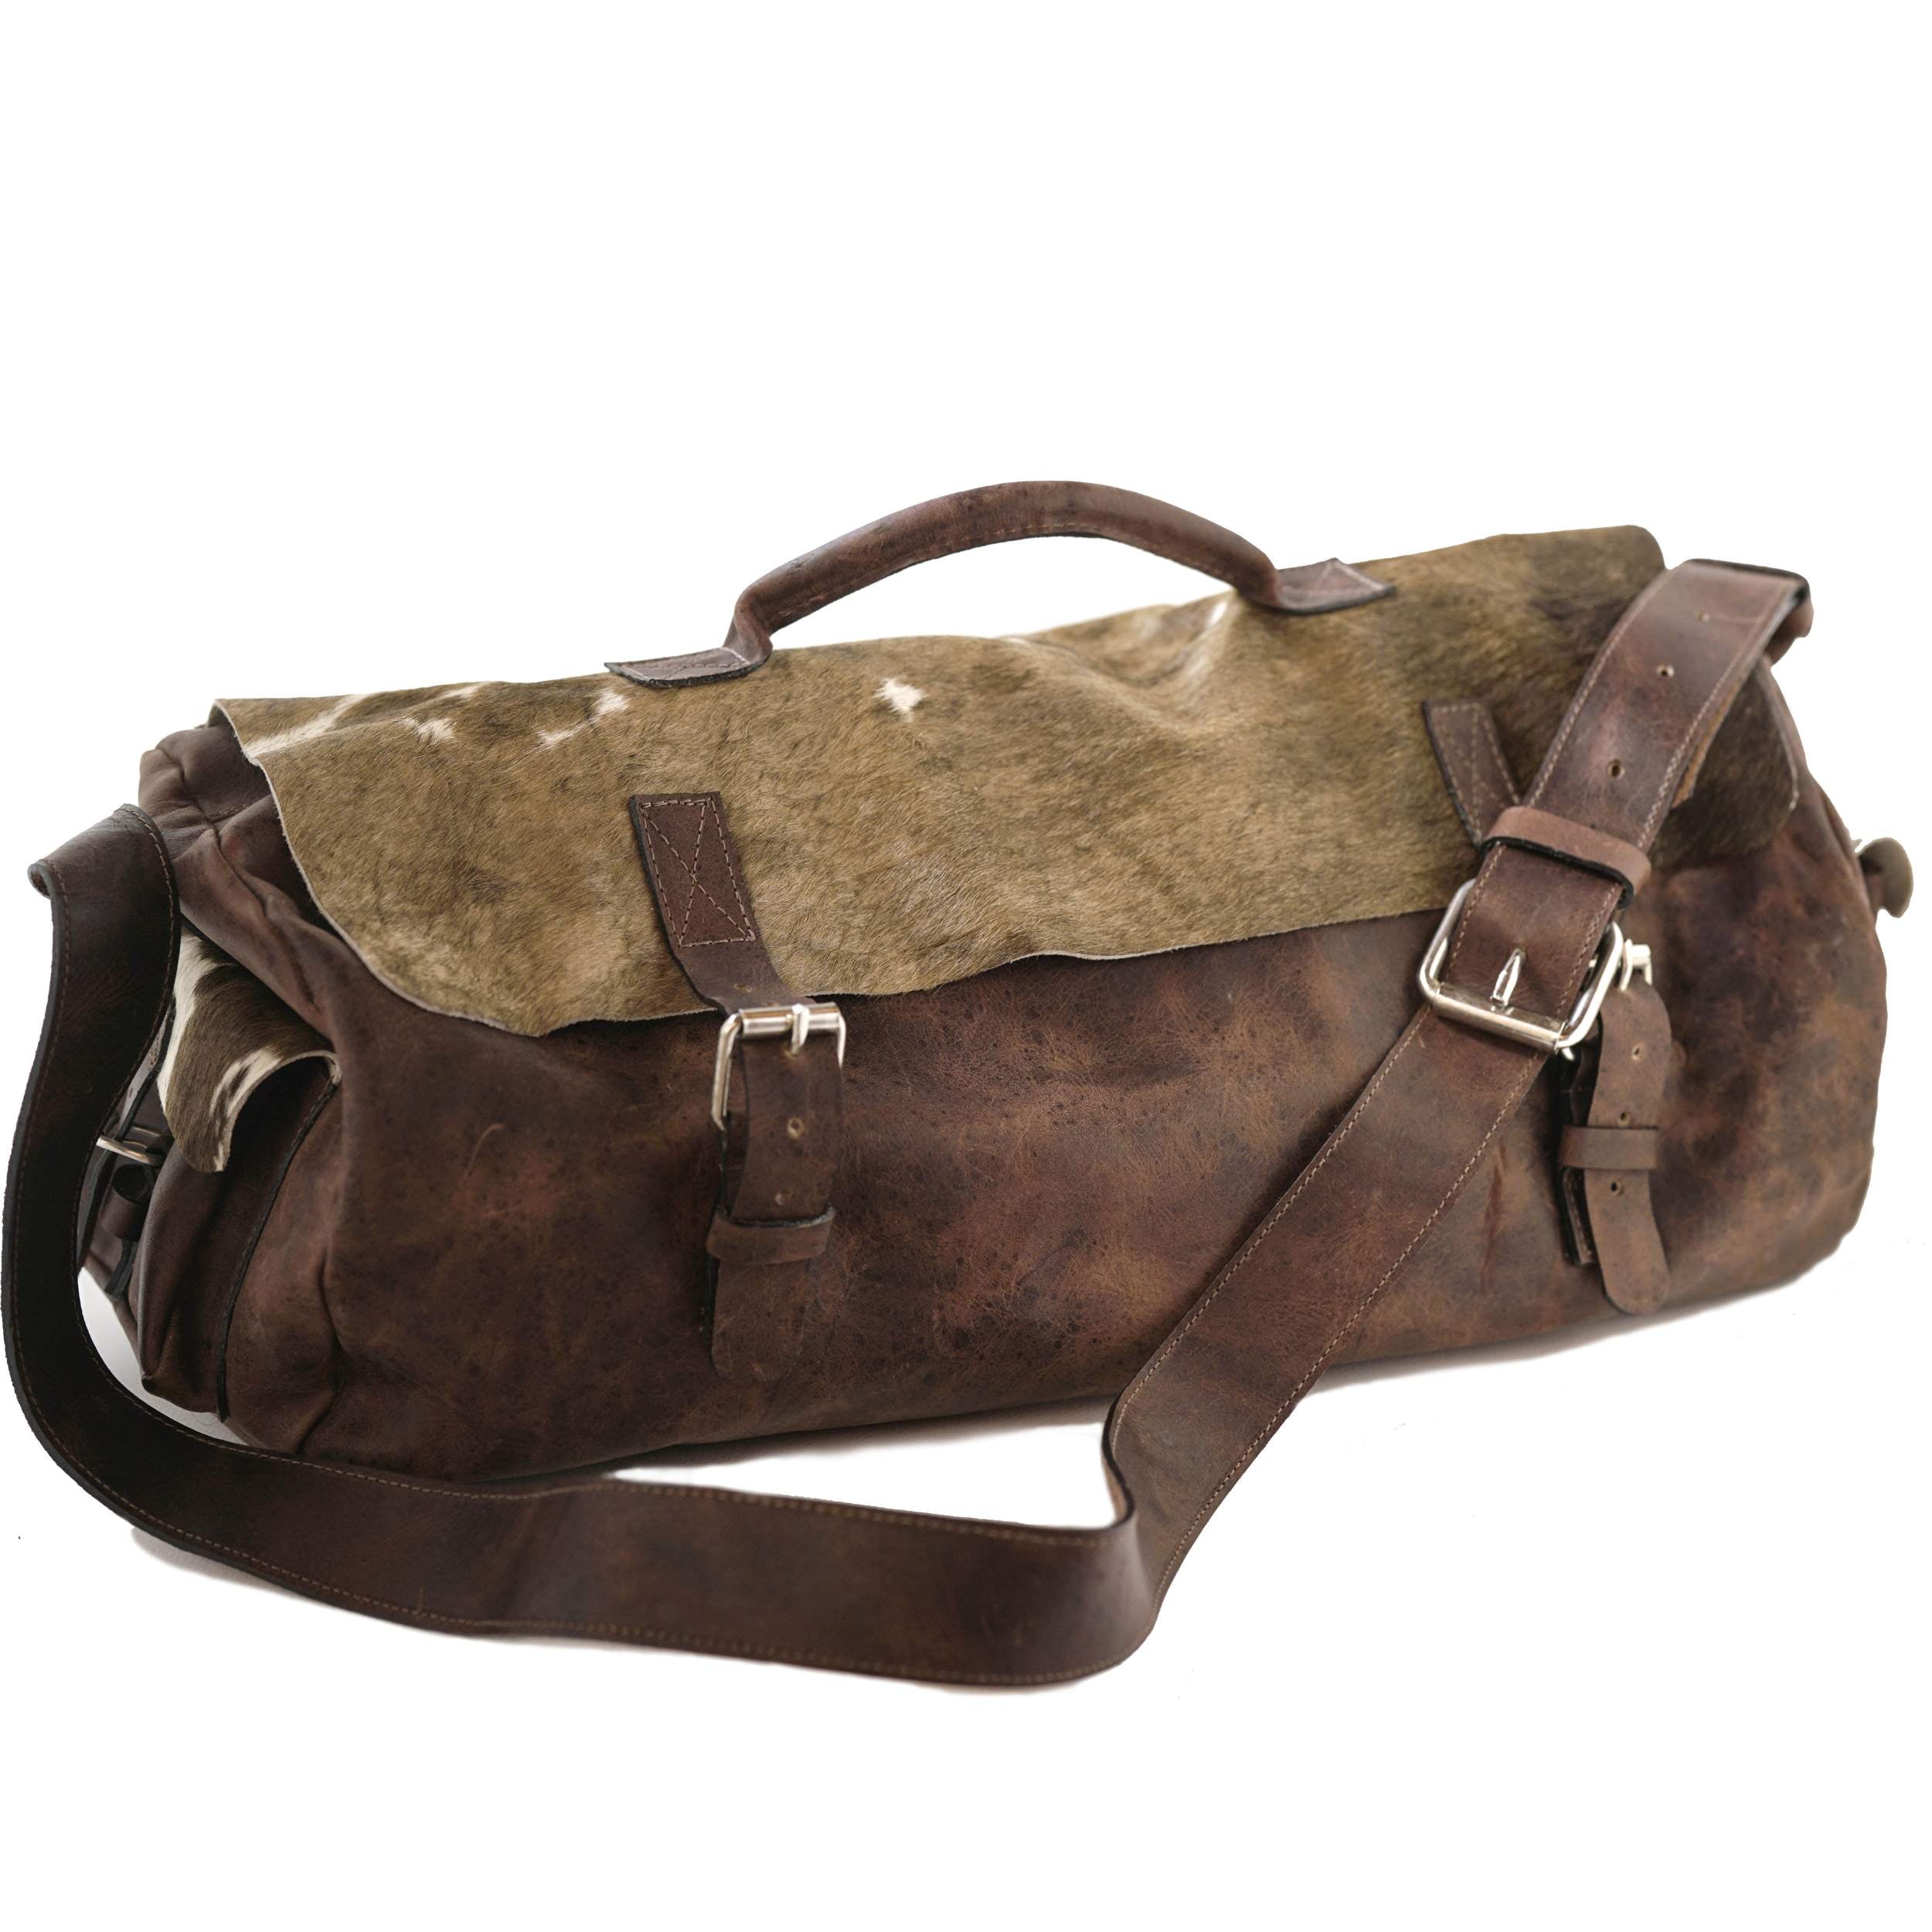  Handmade Leather Duffel Bag Luxury Duffle Bag Leather weekender  Backpack for Men Full Grain Brown Leather TSA Approved- Lifetime Warrantee  : Handmade Products